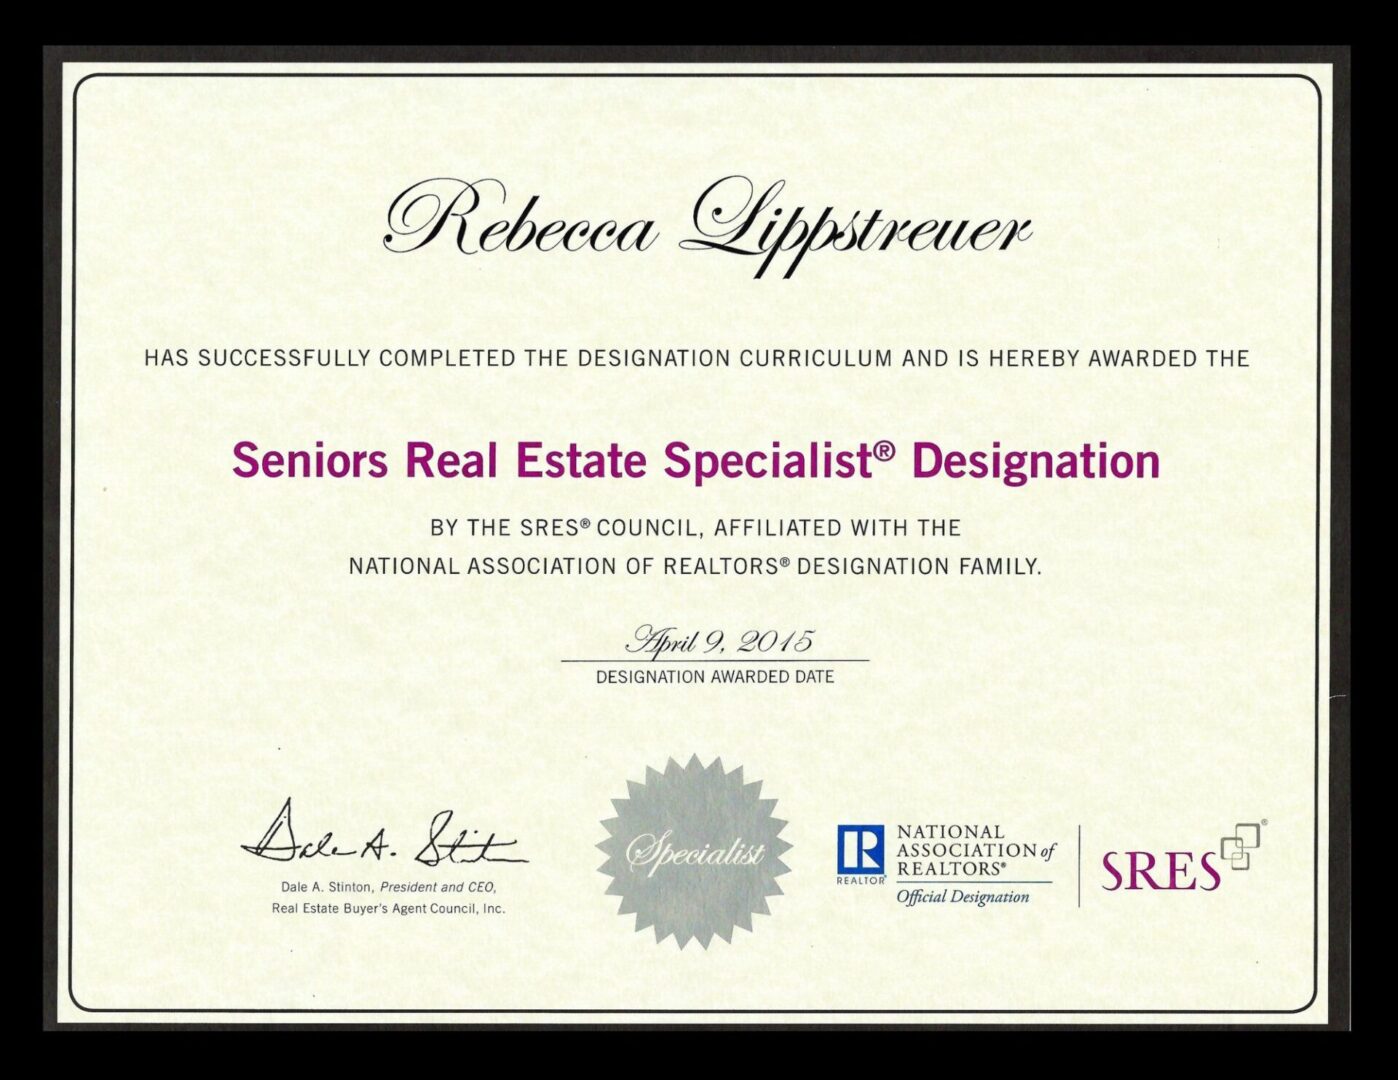 A certificate of appreciation for the designation of seniors real estate specialist designation.